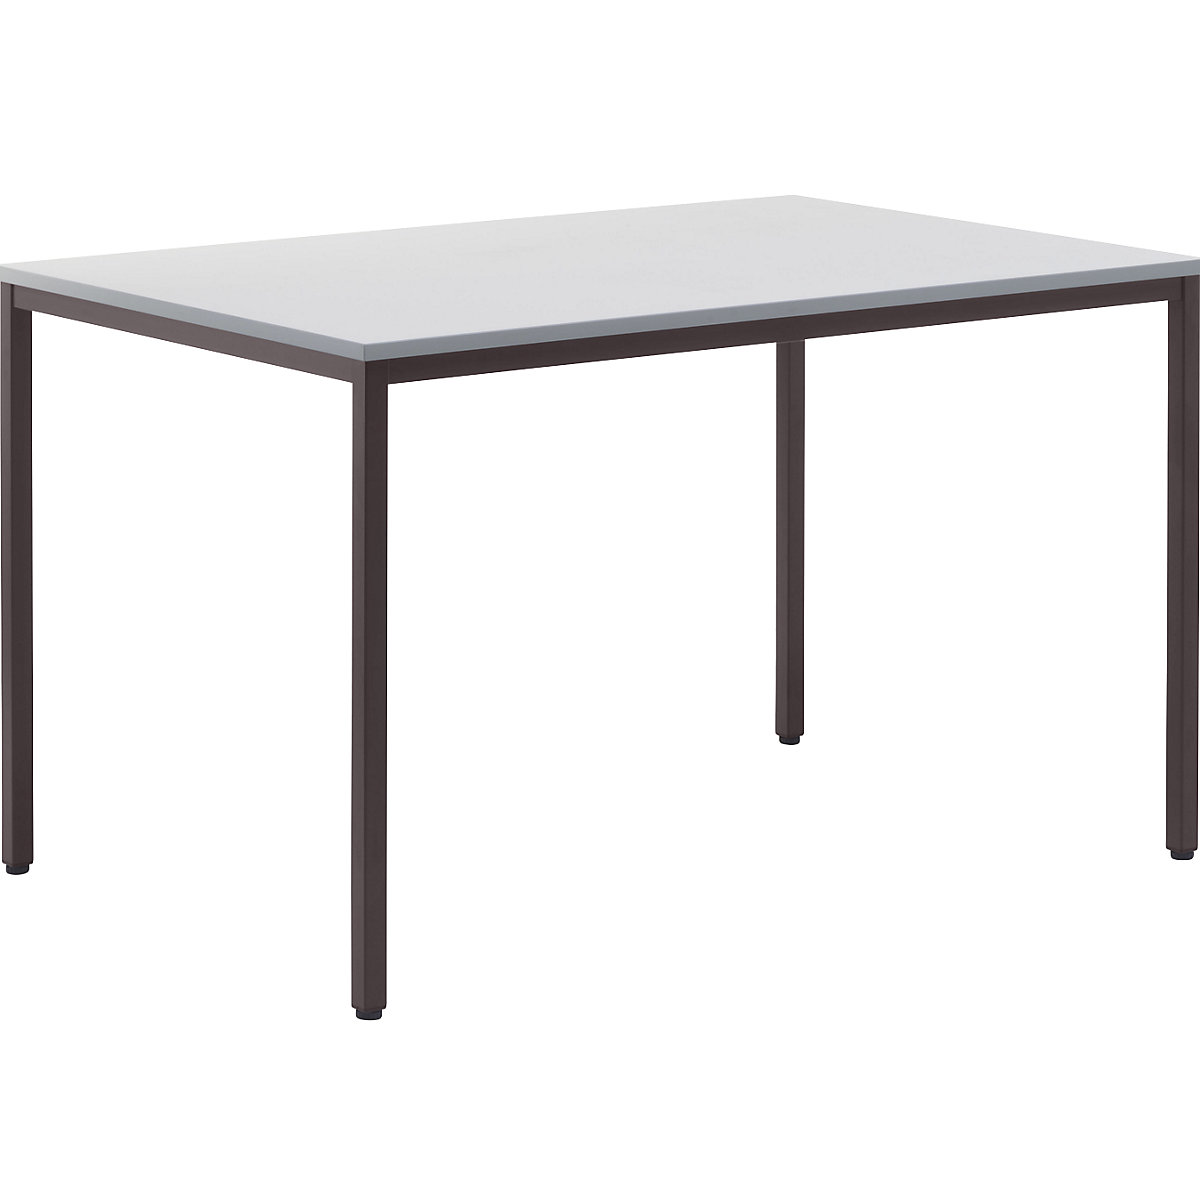 Multifunctionele tafel – eurokraft basic, h x b x d = 720 x 1200 x 800 mm, blad lichtgrijs, frame grijsbruin